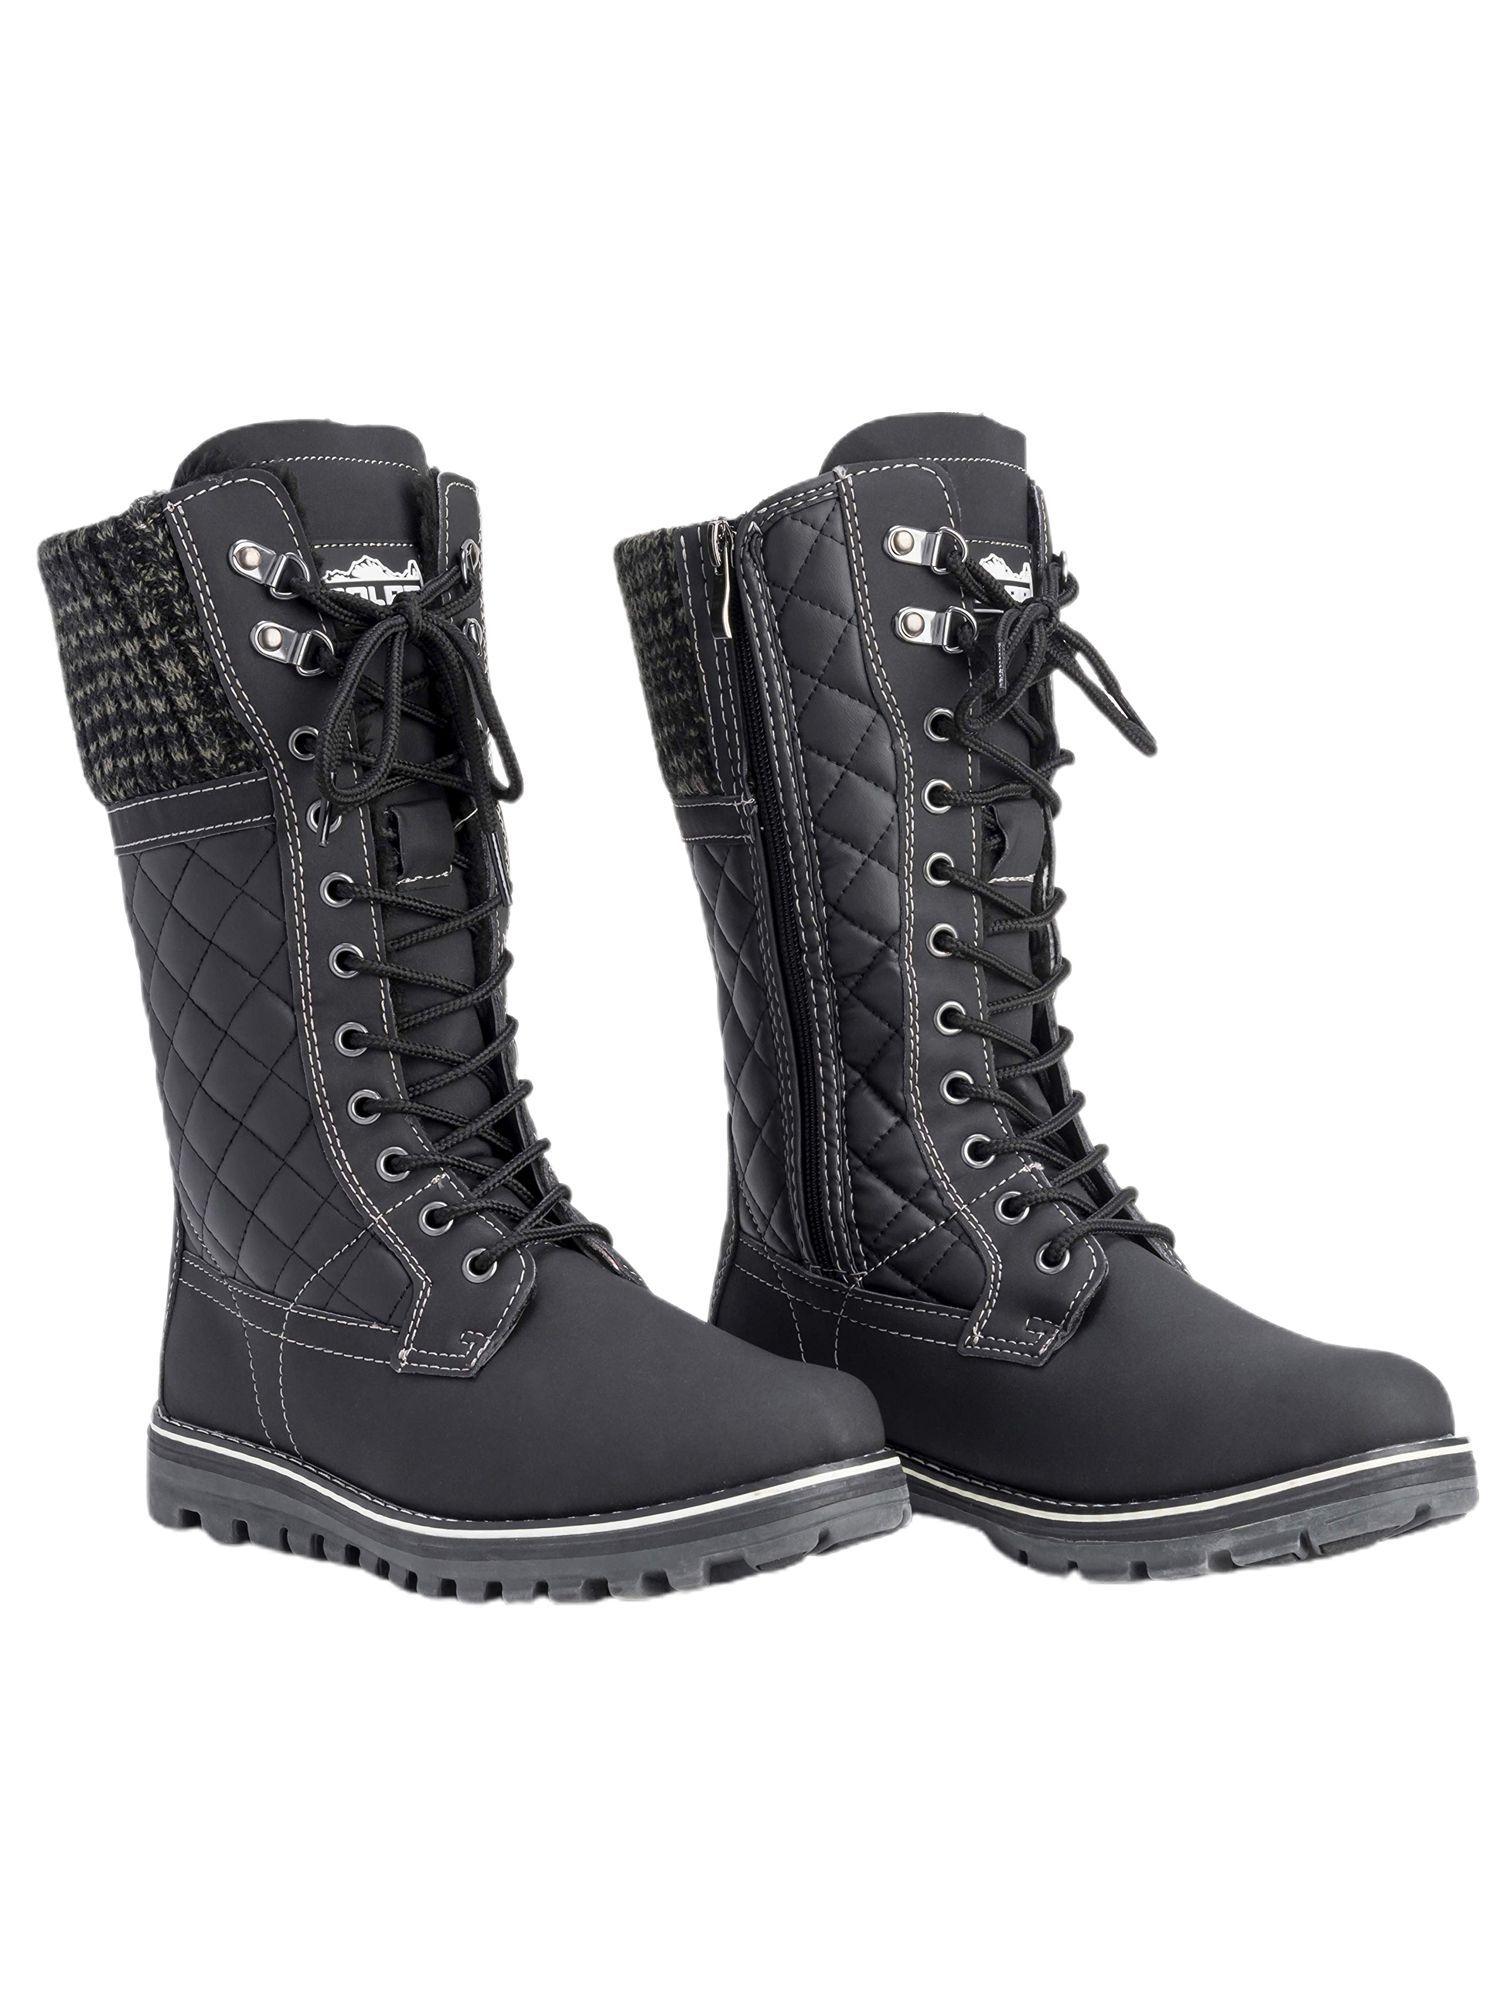 grey criss cross style girls winter snow boots